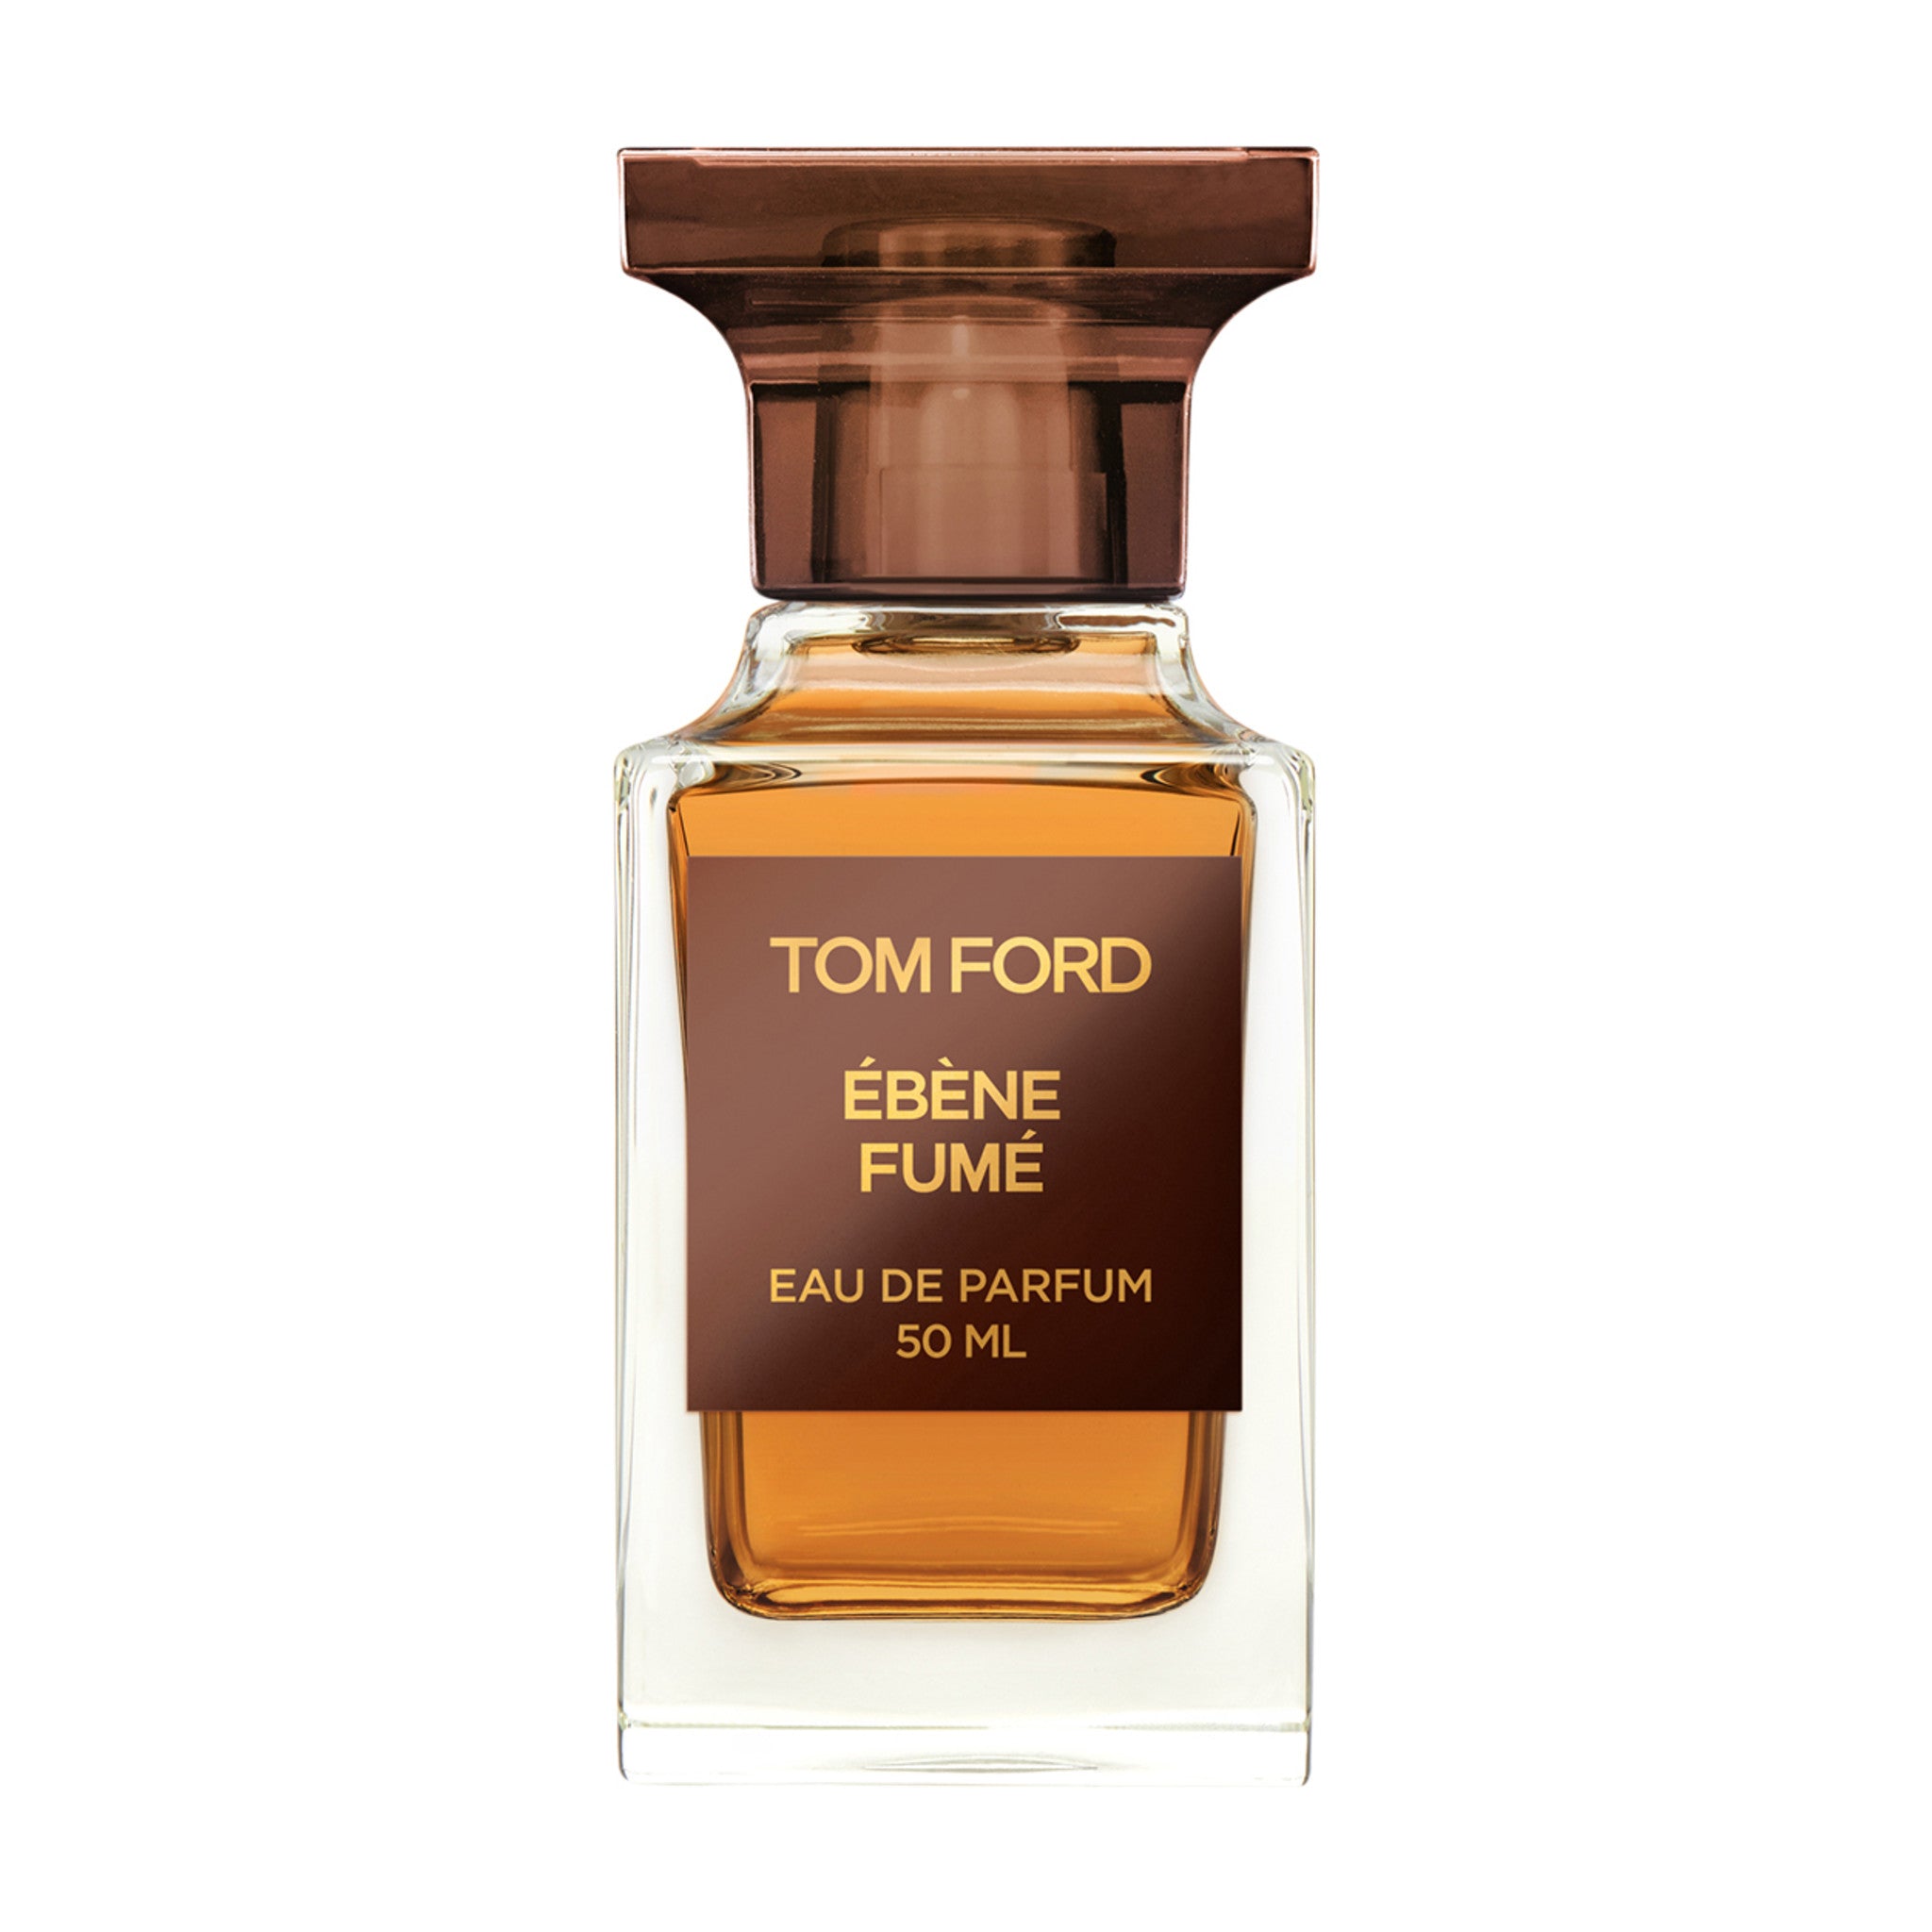 Tom Ford Ebene Fume Eau de Parfum main image.